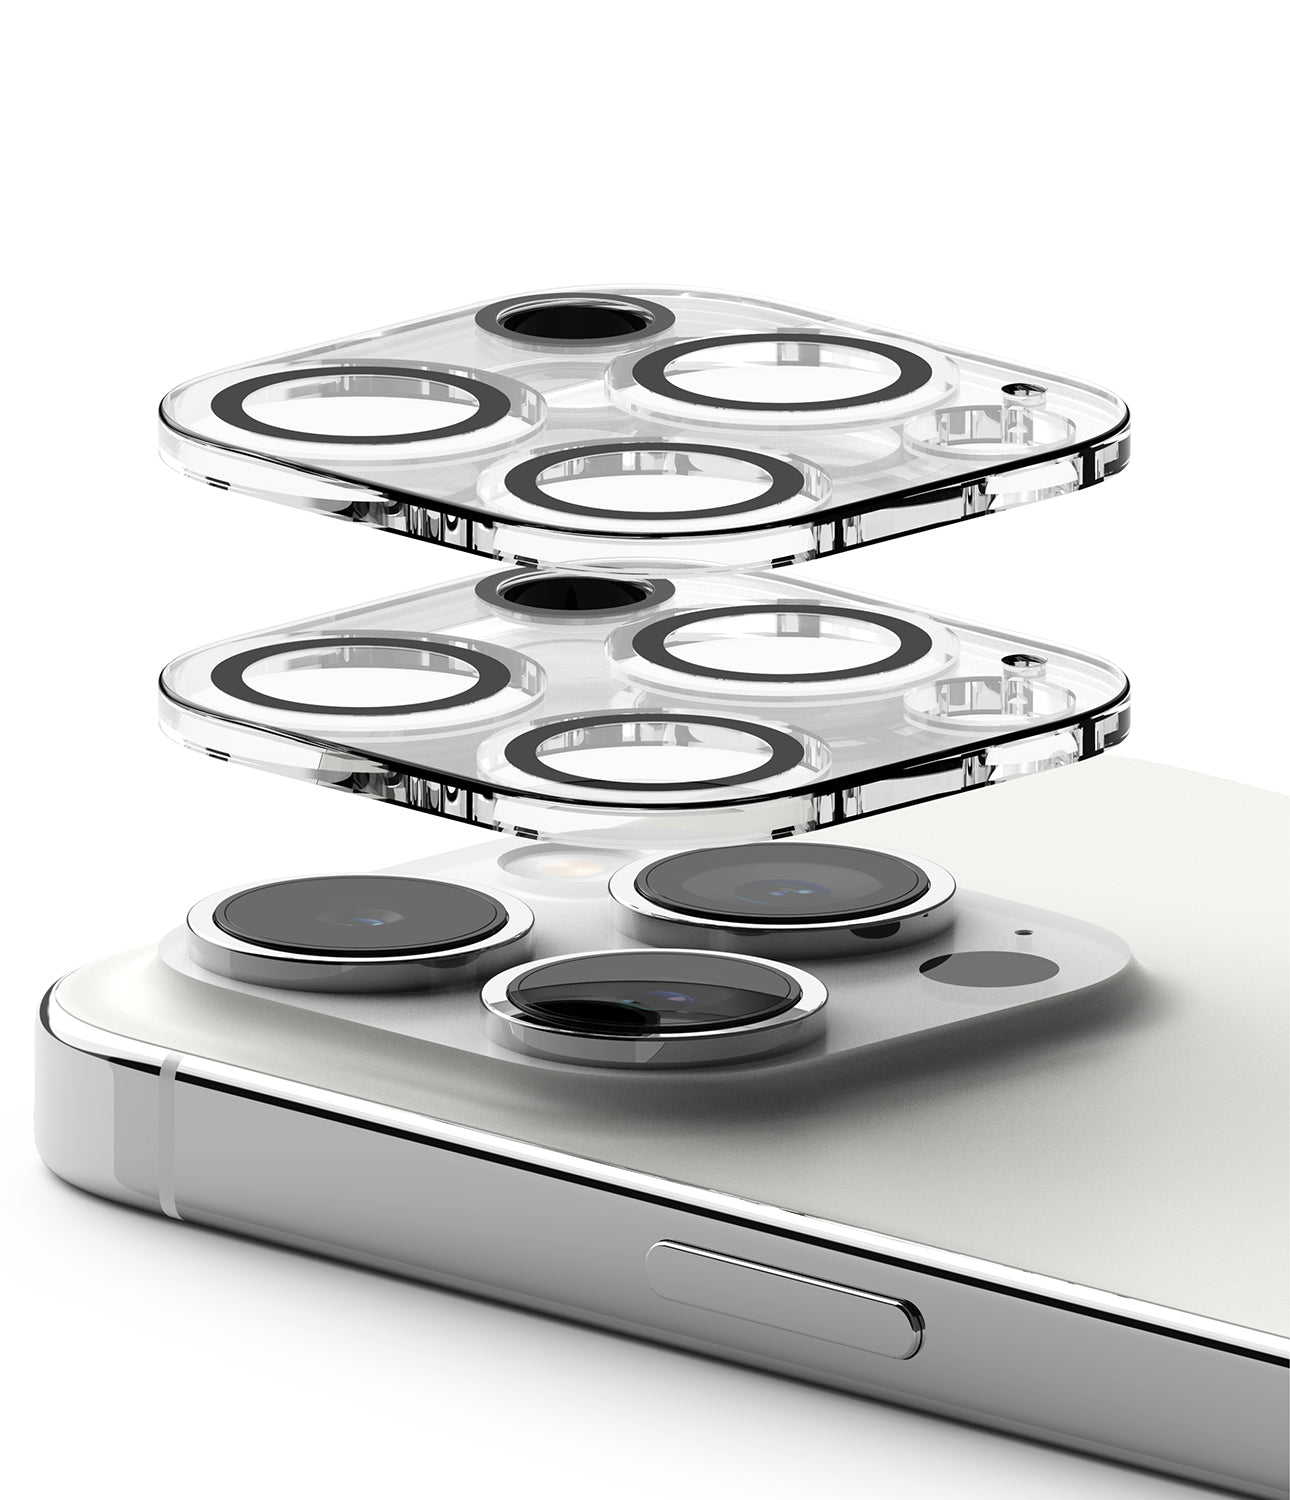 iPhone 15 Camera Lens Protector